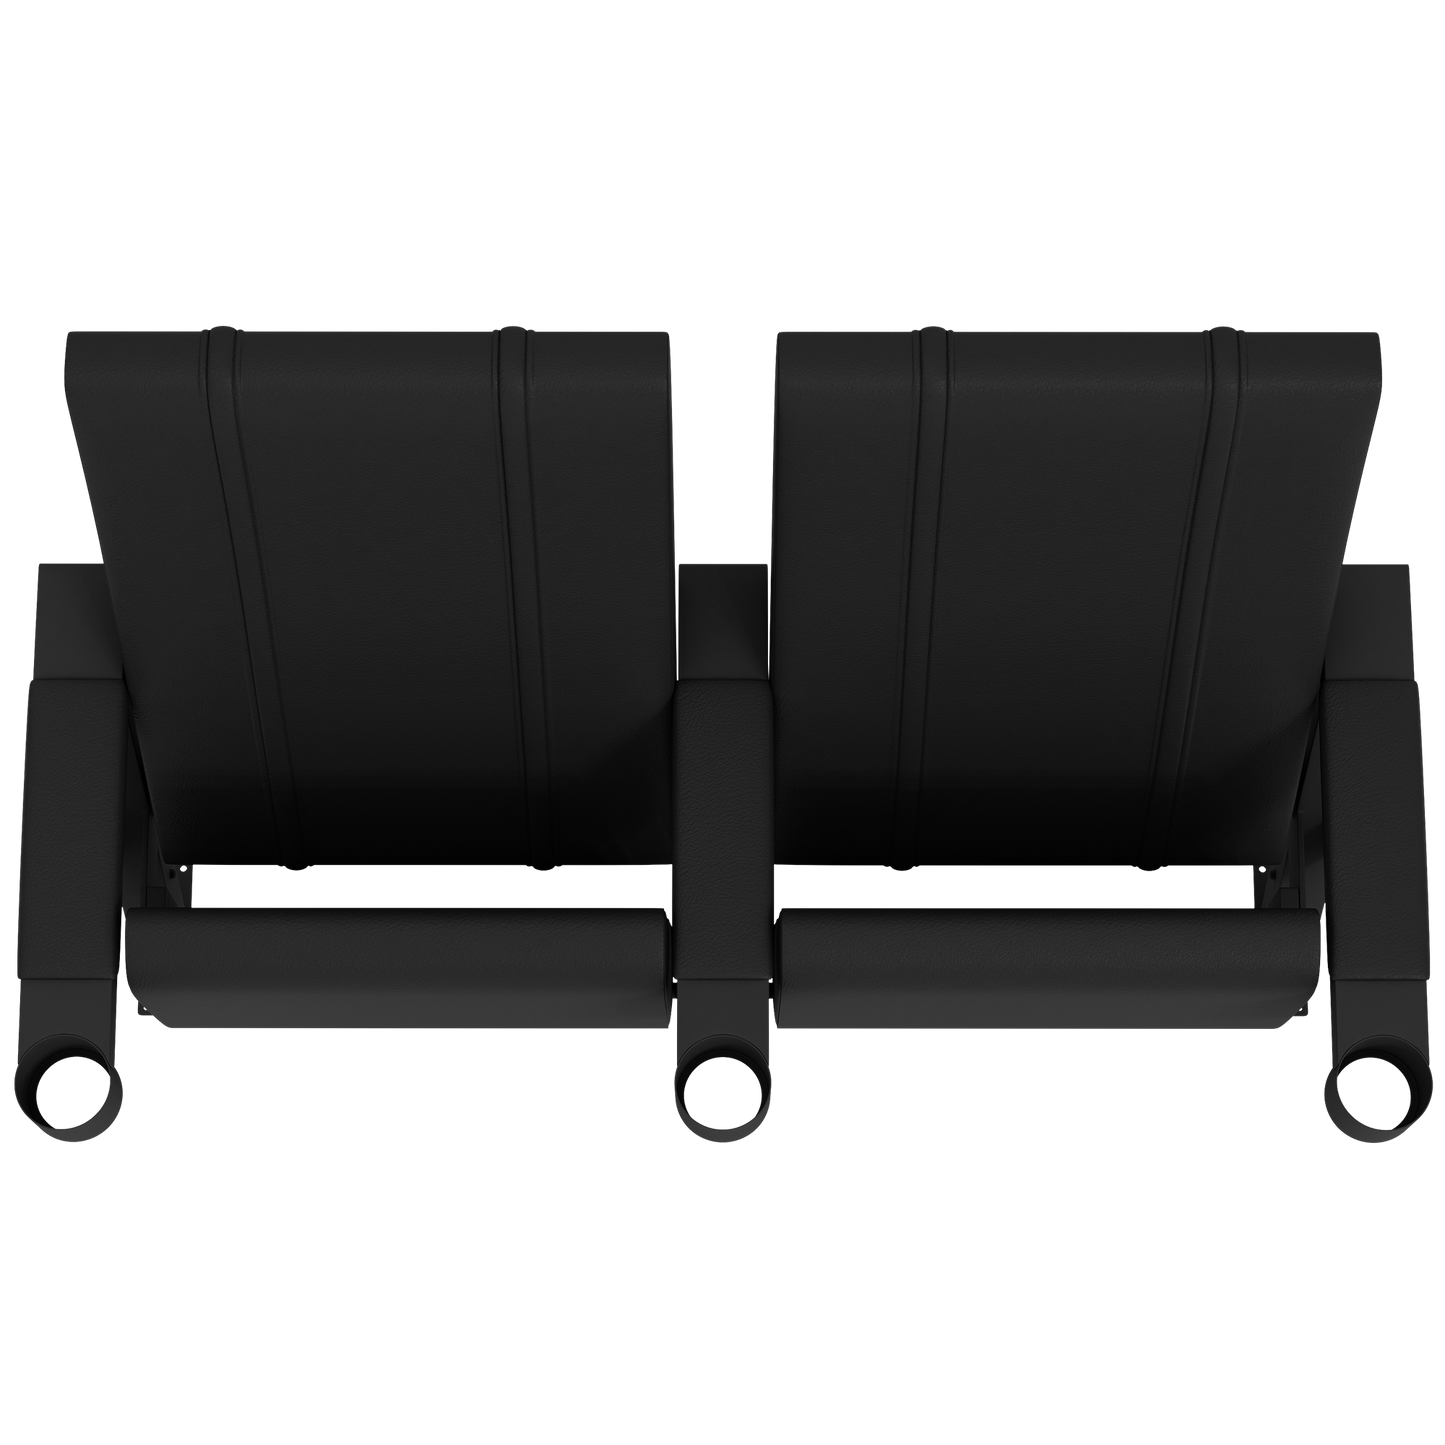 SuiteMax 3.5 VIP Seats with Dallas Cowboys Classic Logo